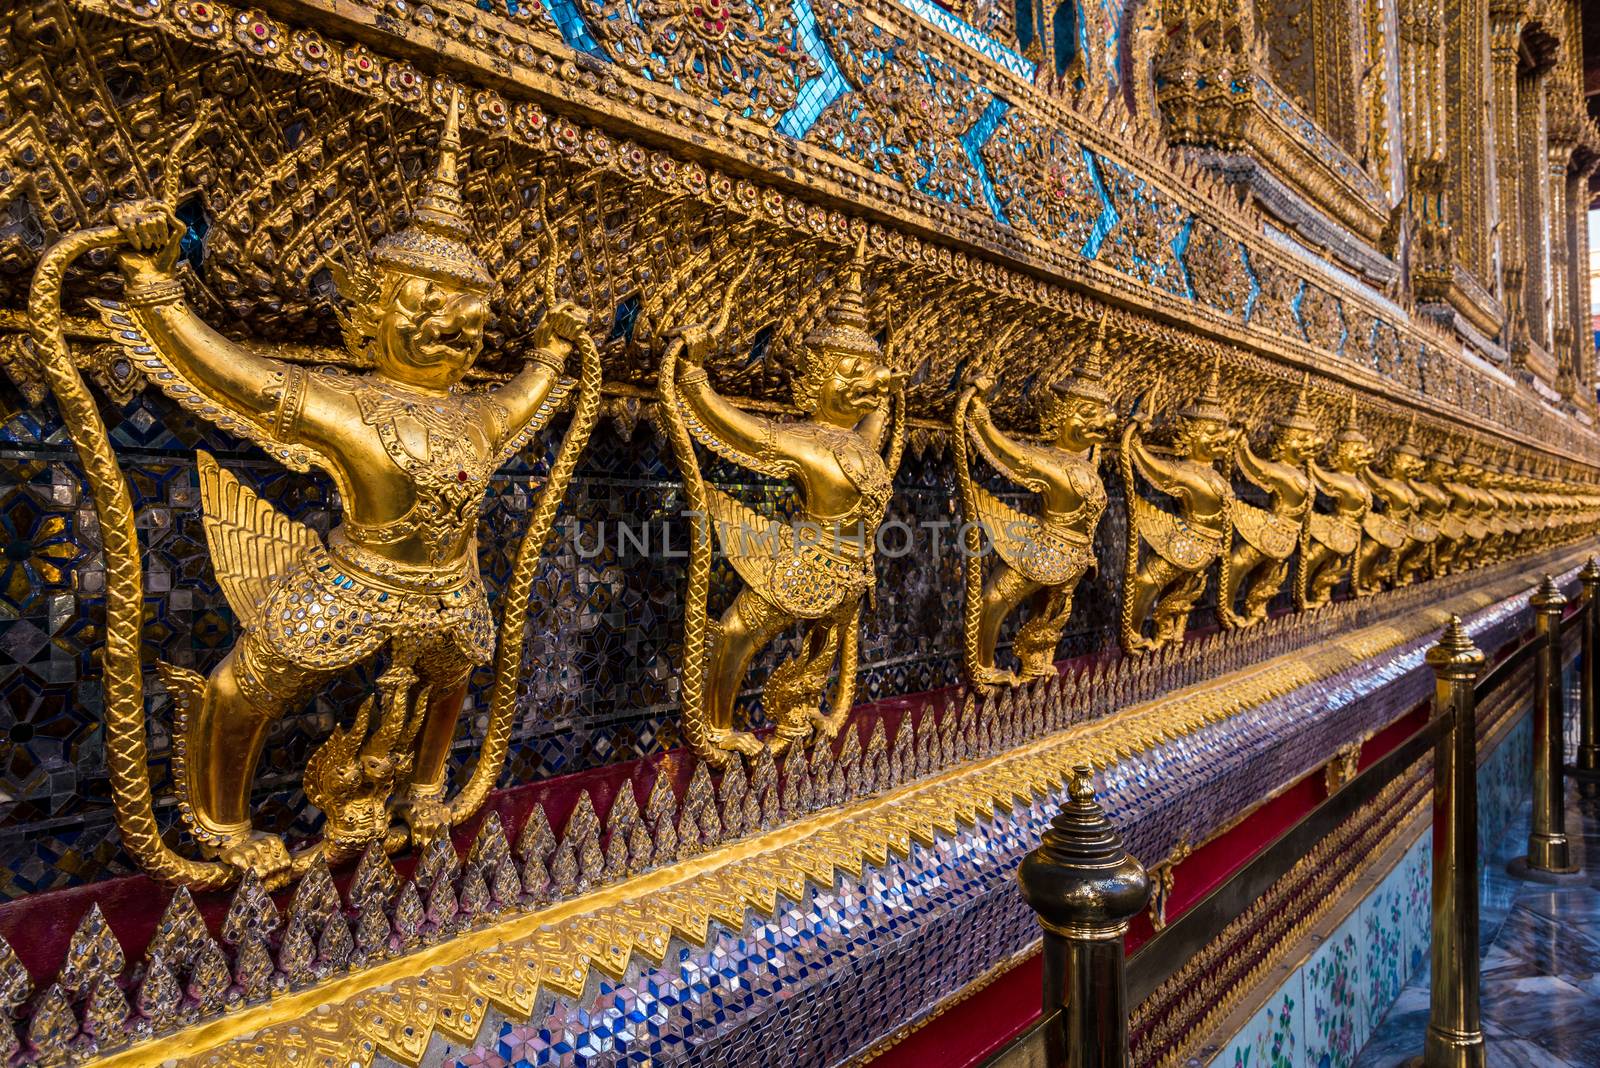 Golden warriors of emerald buddha temple by neelsky